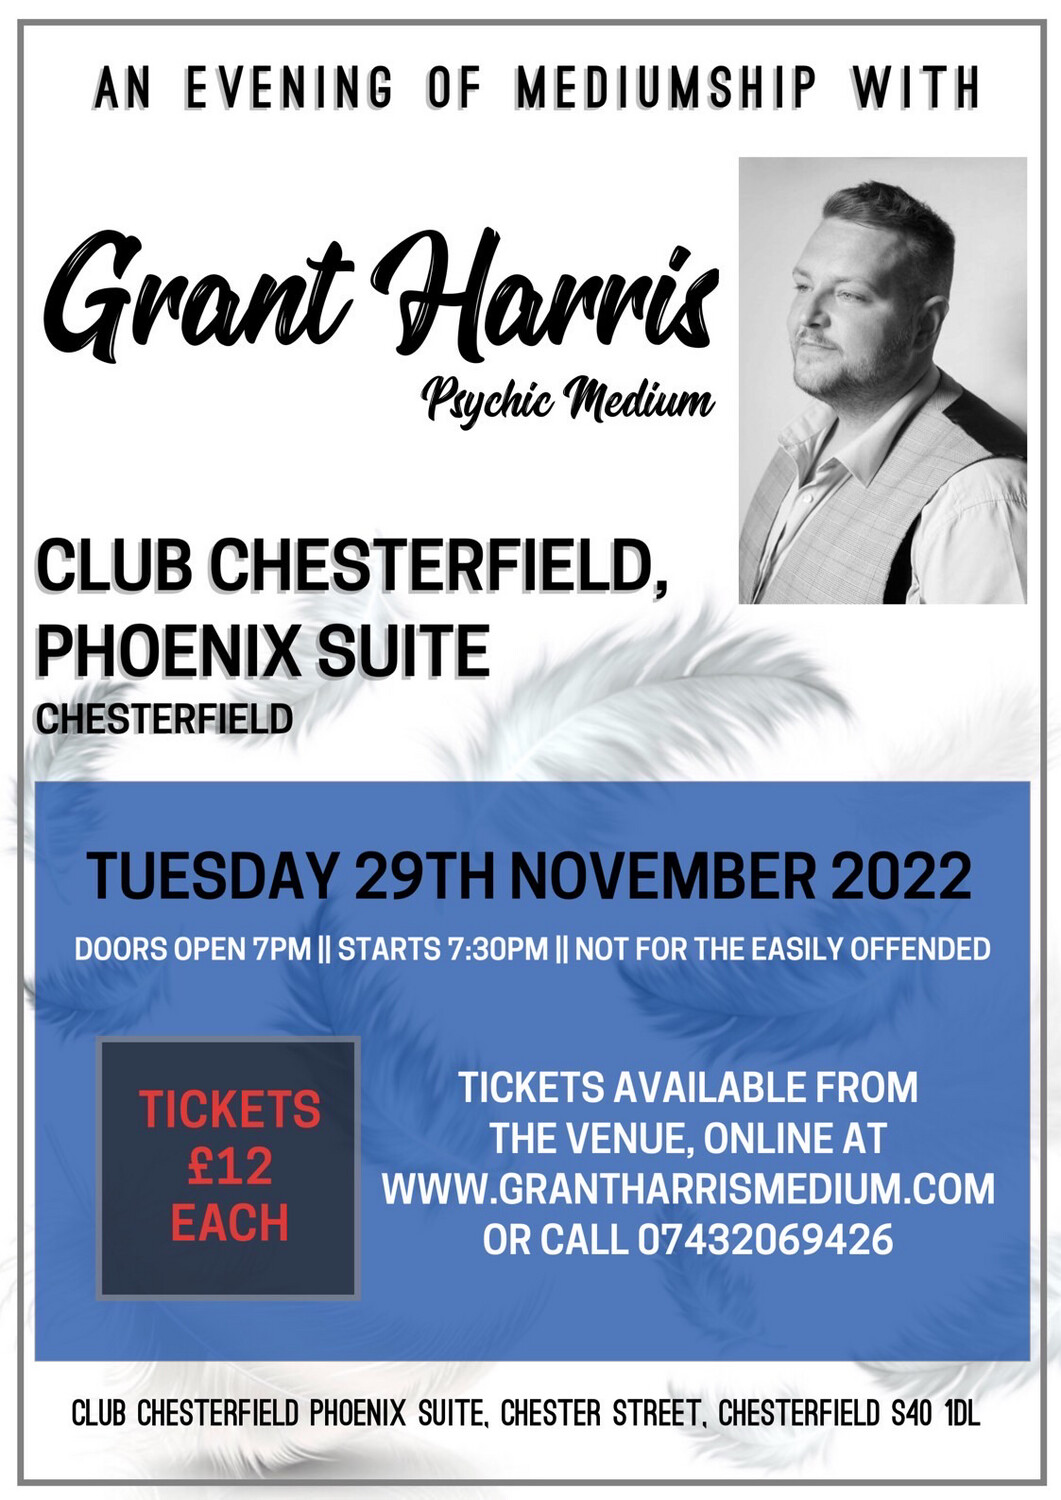 Club Chesterfield, Tuesday 29th November 2022